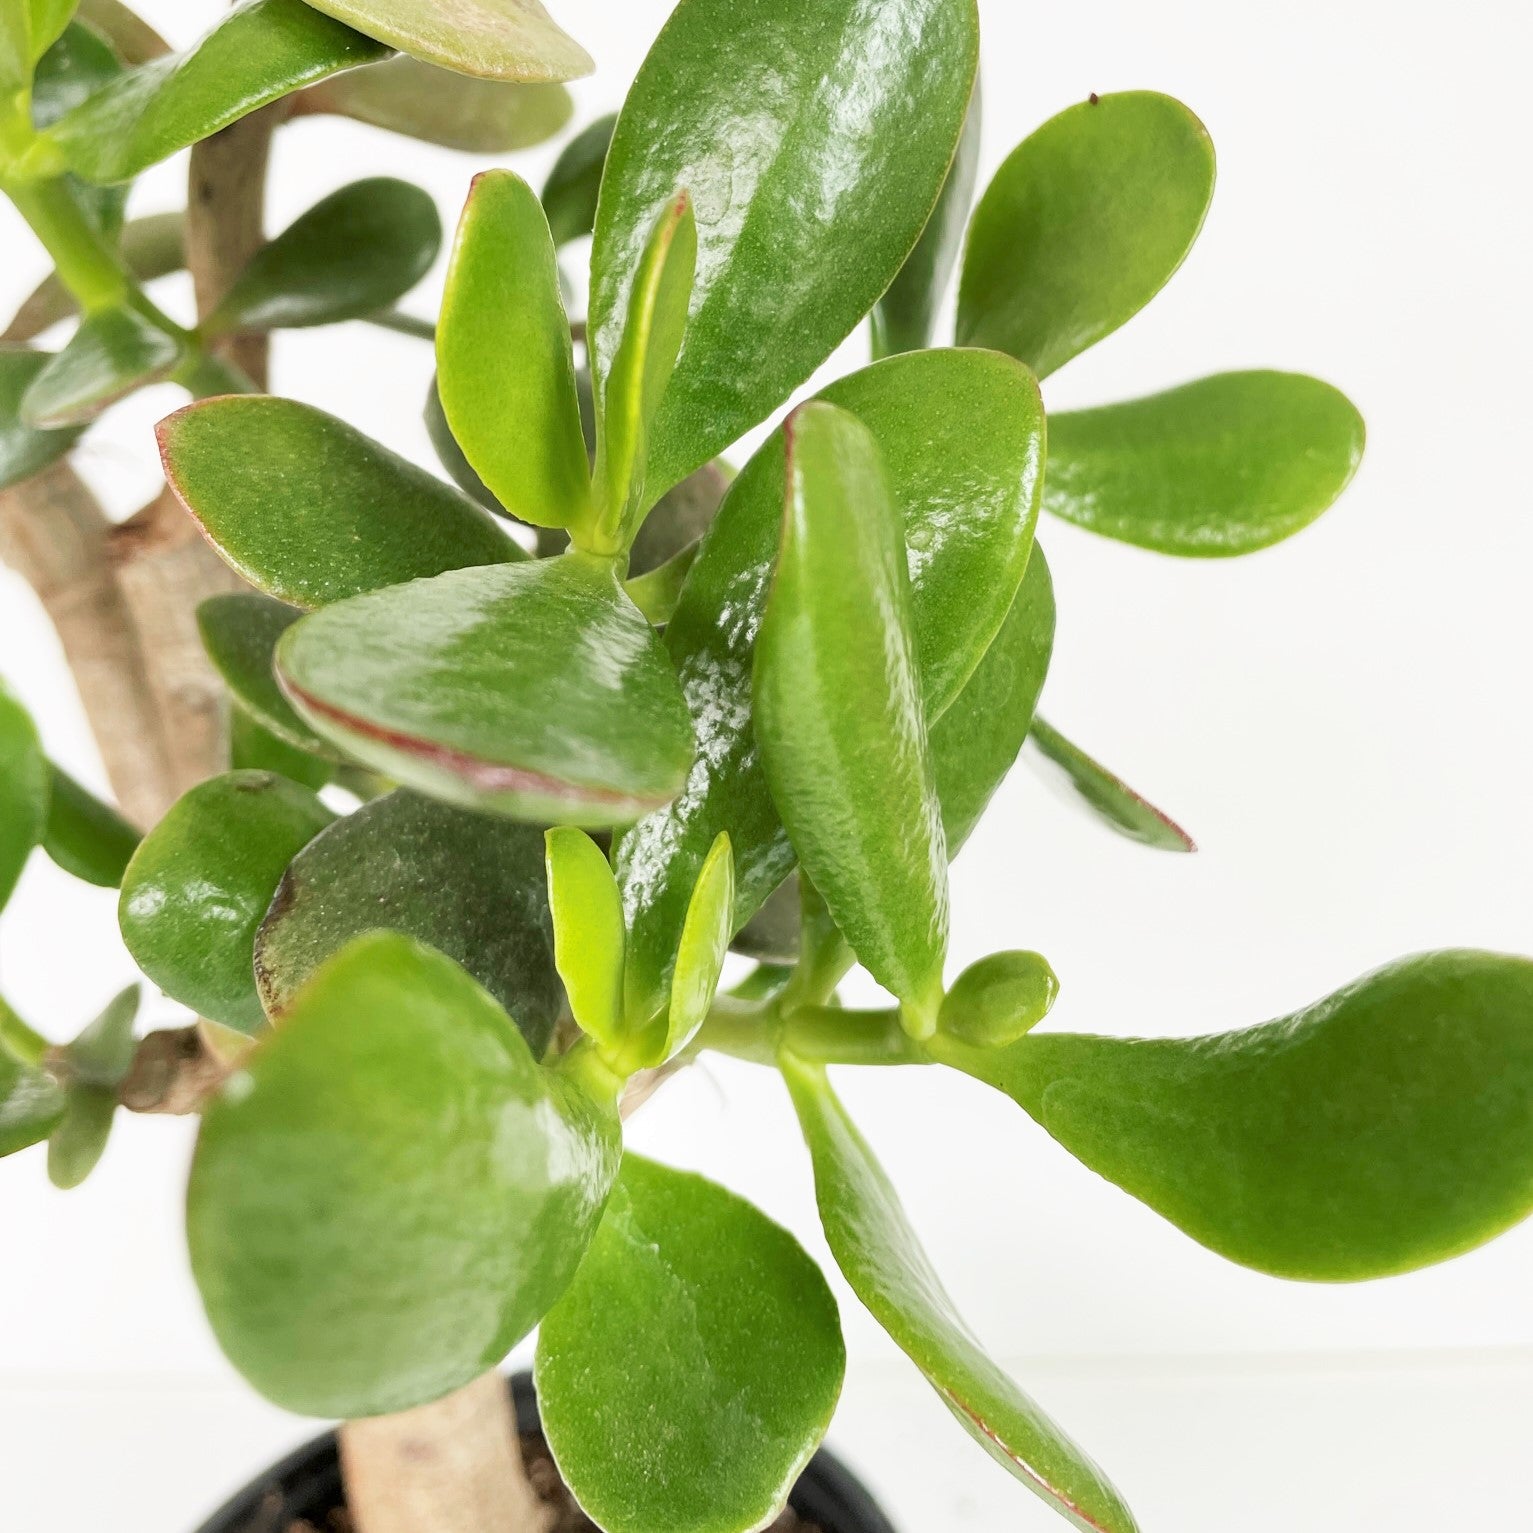 Crassula ovata - Jade Plant, Money Plant, Lucky Plant